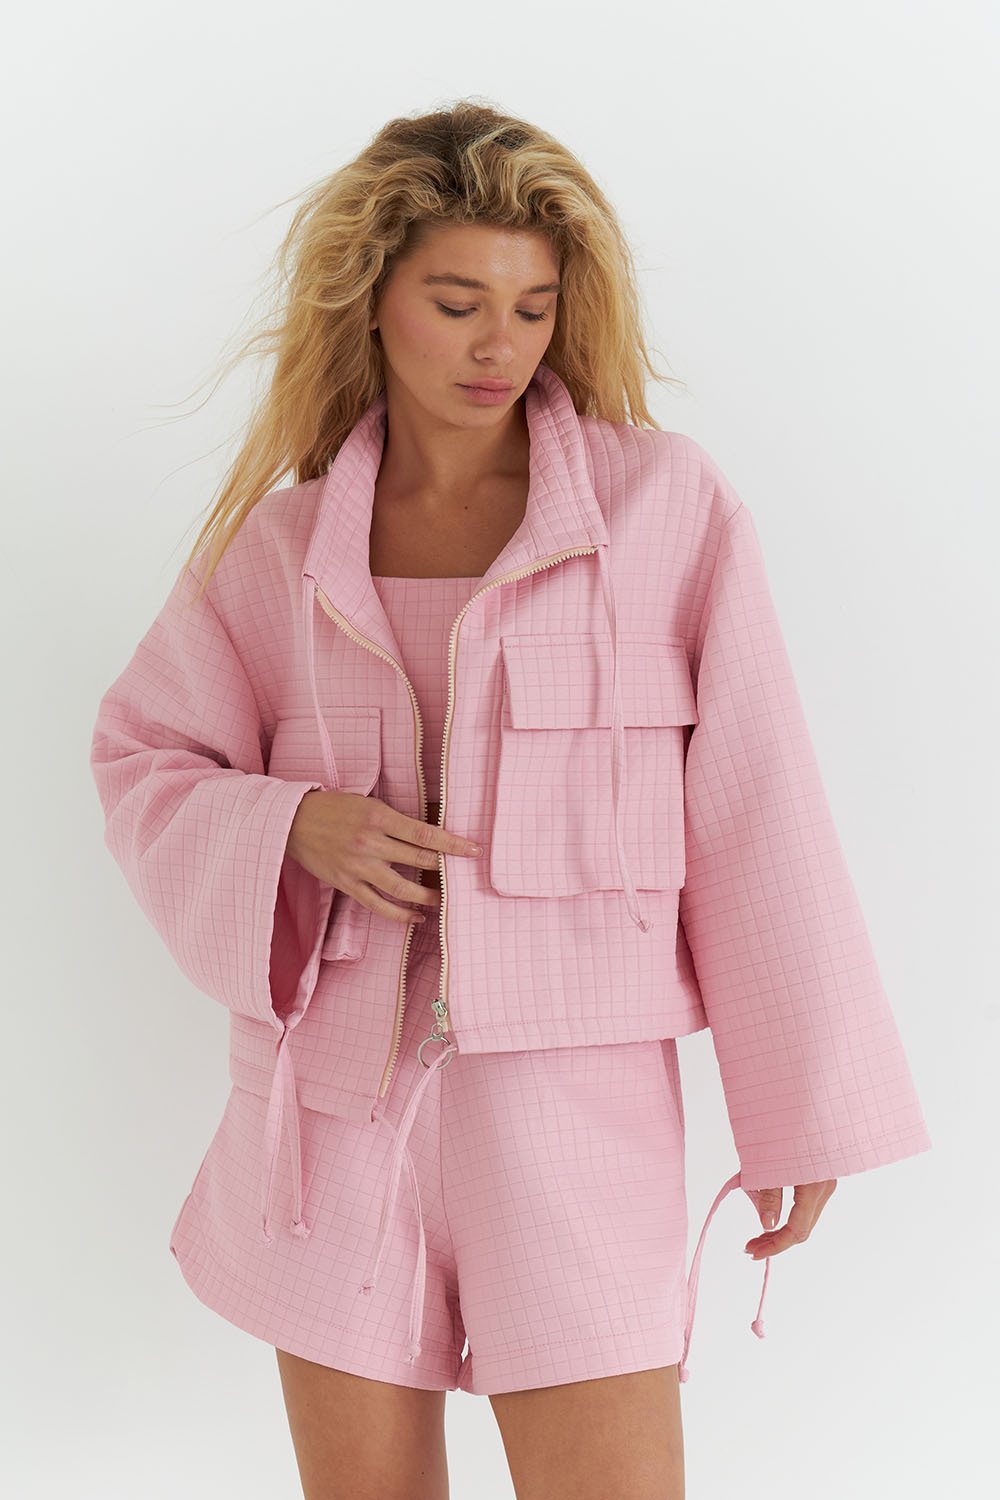 

Куртка на завязках со стежкой в квадрат розового цвета, Розовый, Куртка на завязках со стежкой в квадрат розового цвета